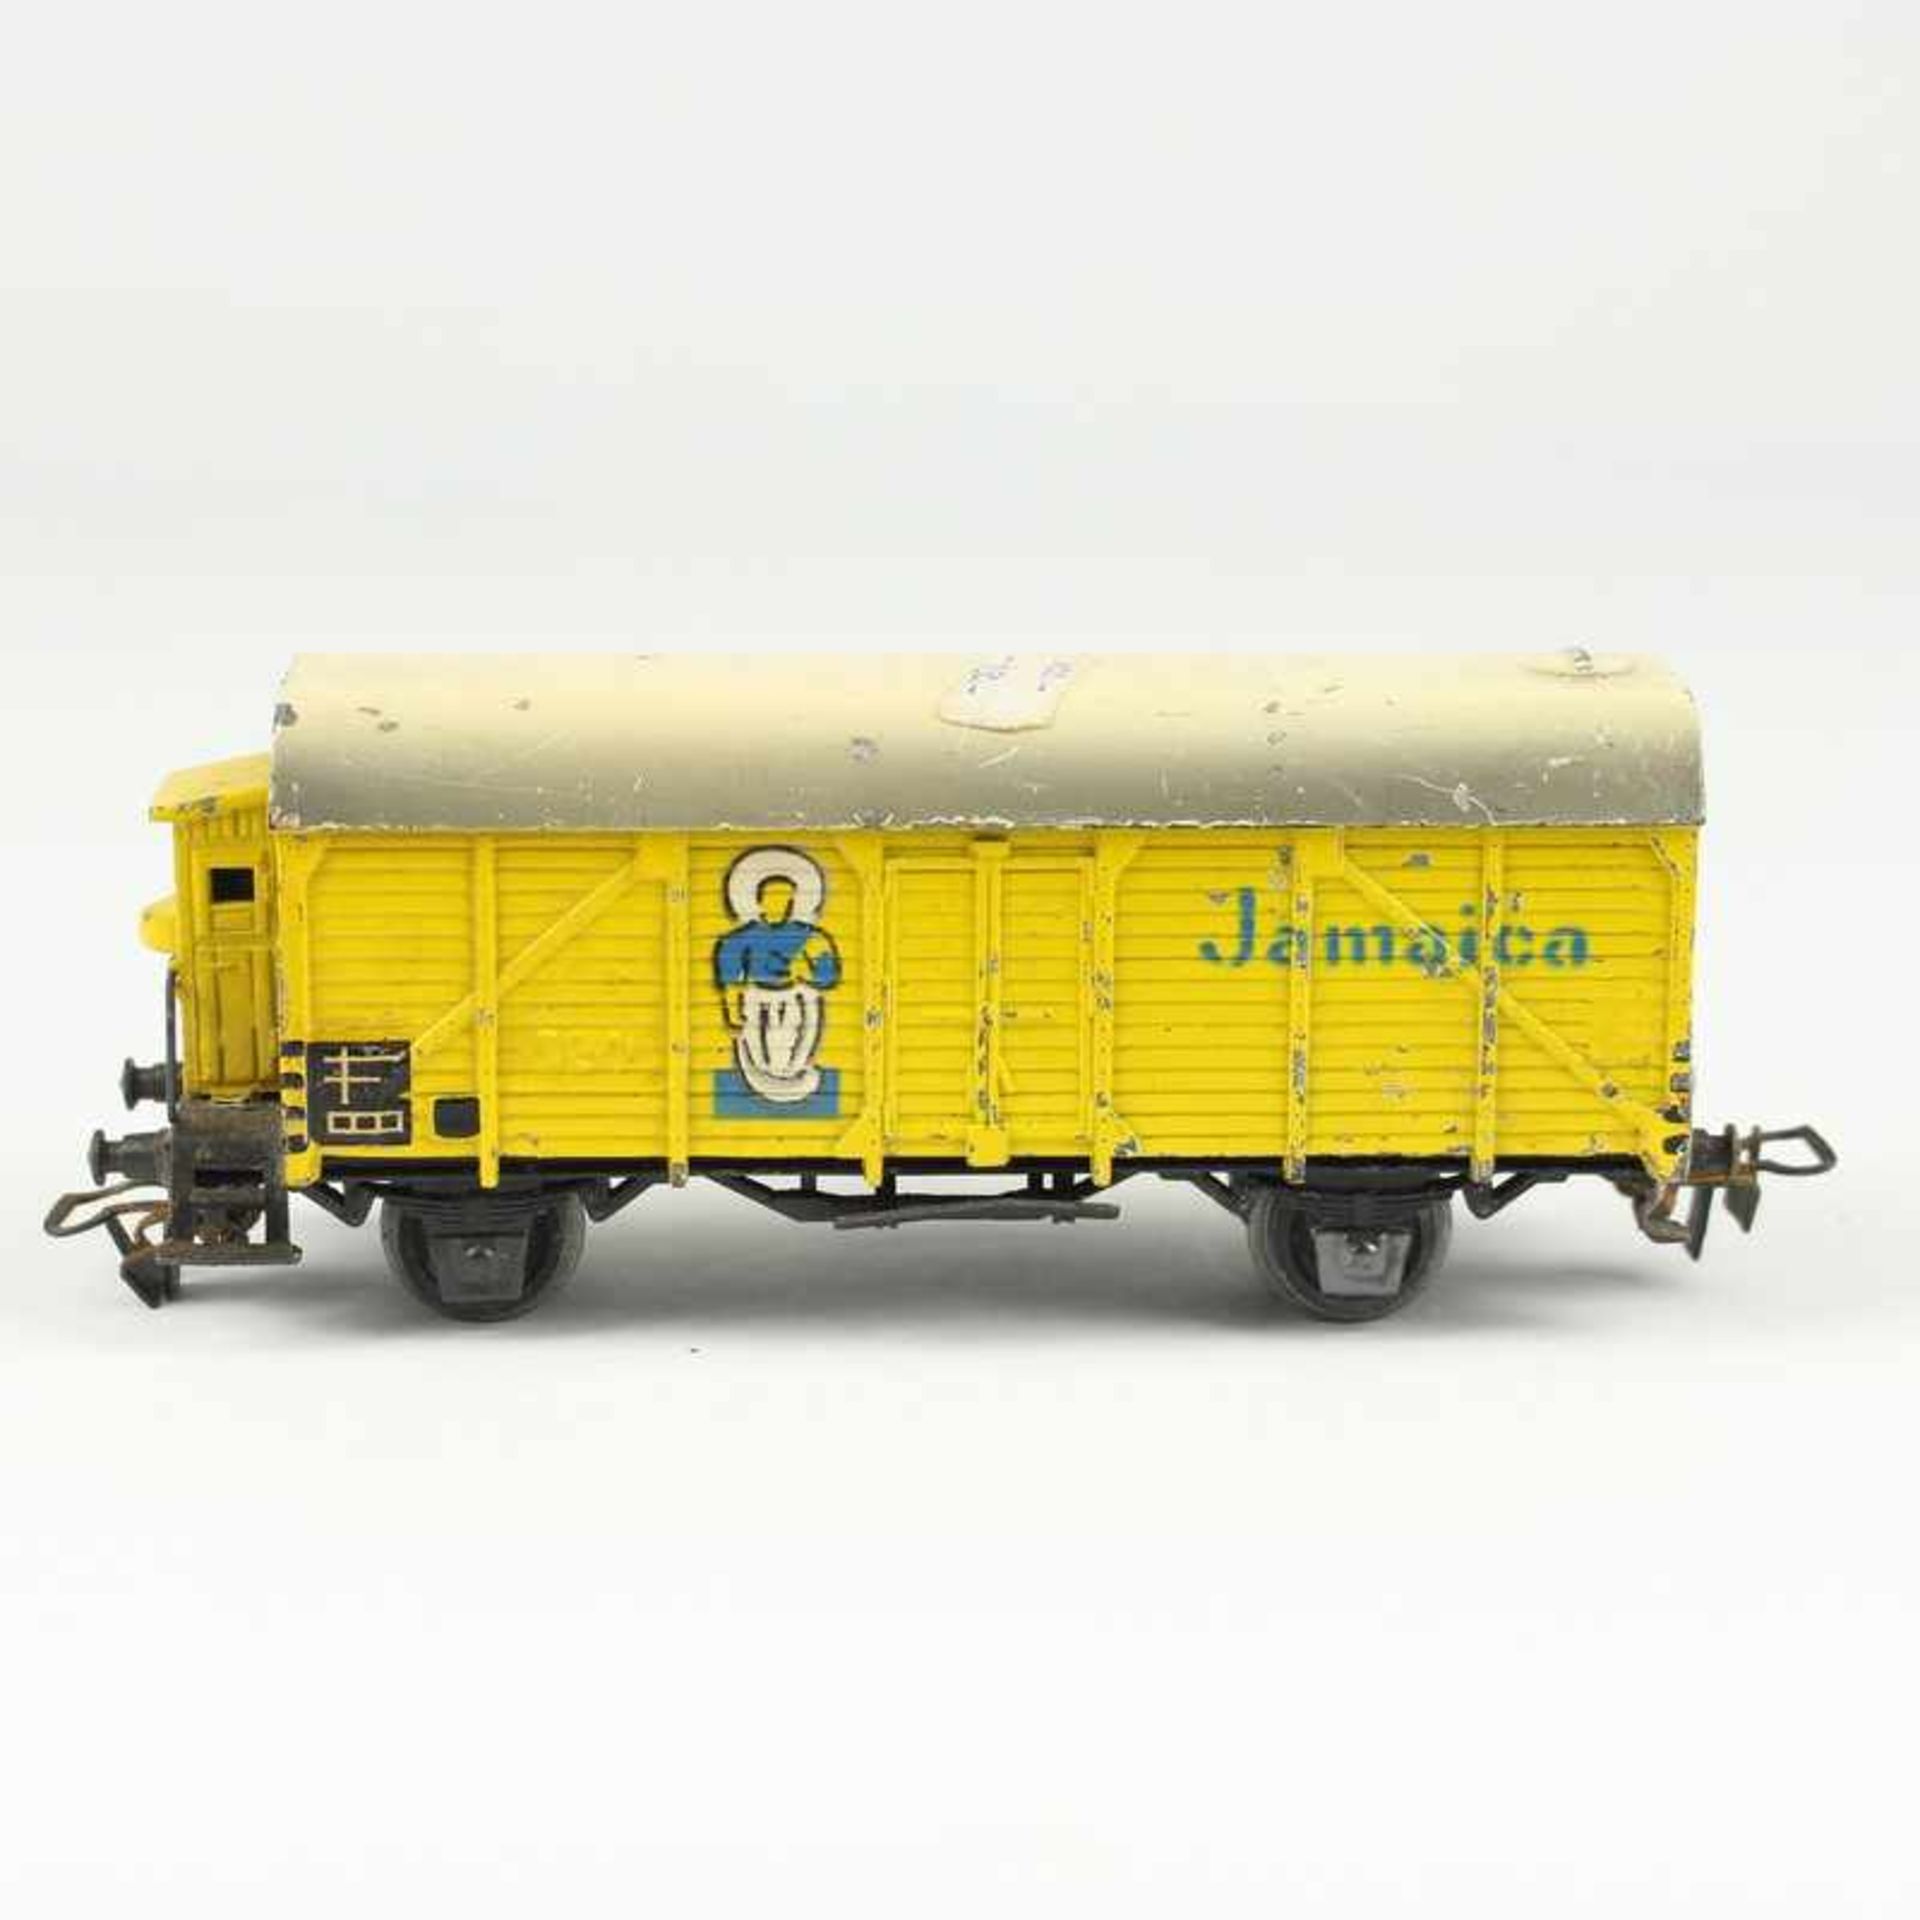 Märklin - Eisenbahn geschlossener Güterwagen 324 mit Bremserhaus, gelber Bananenwagen "Jamaica",